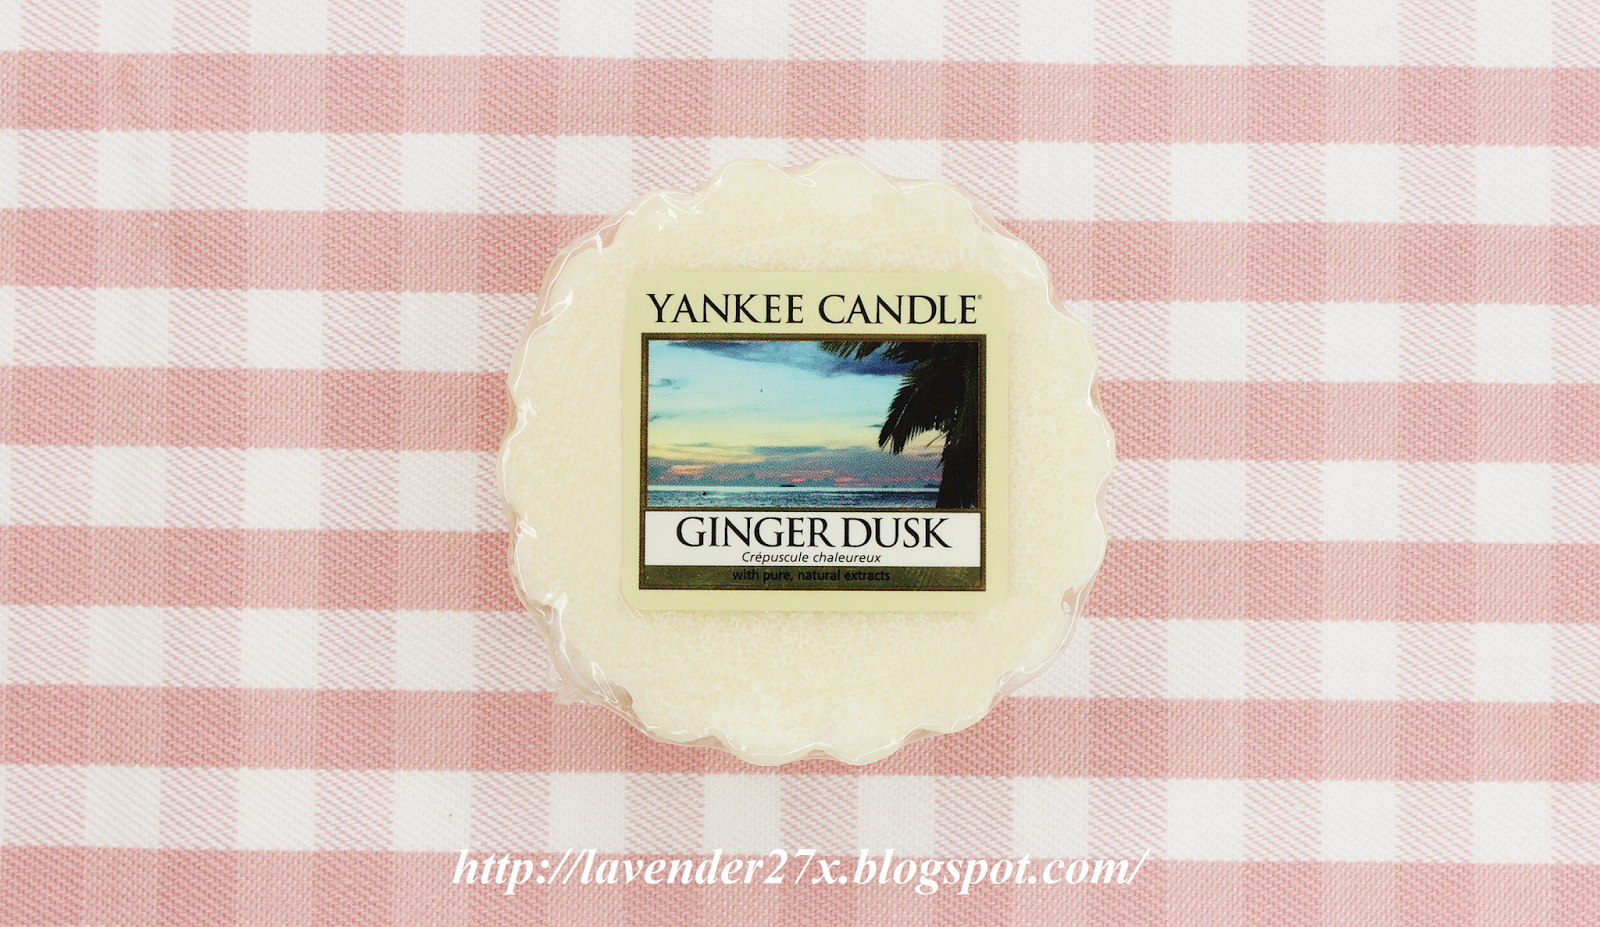 http://lavender27x.blogspot.com/2014/12/pachnido-yankee-candle-ginger-dusk.html